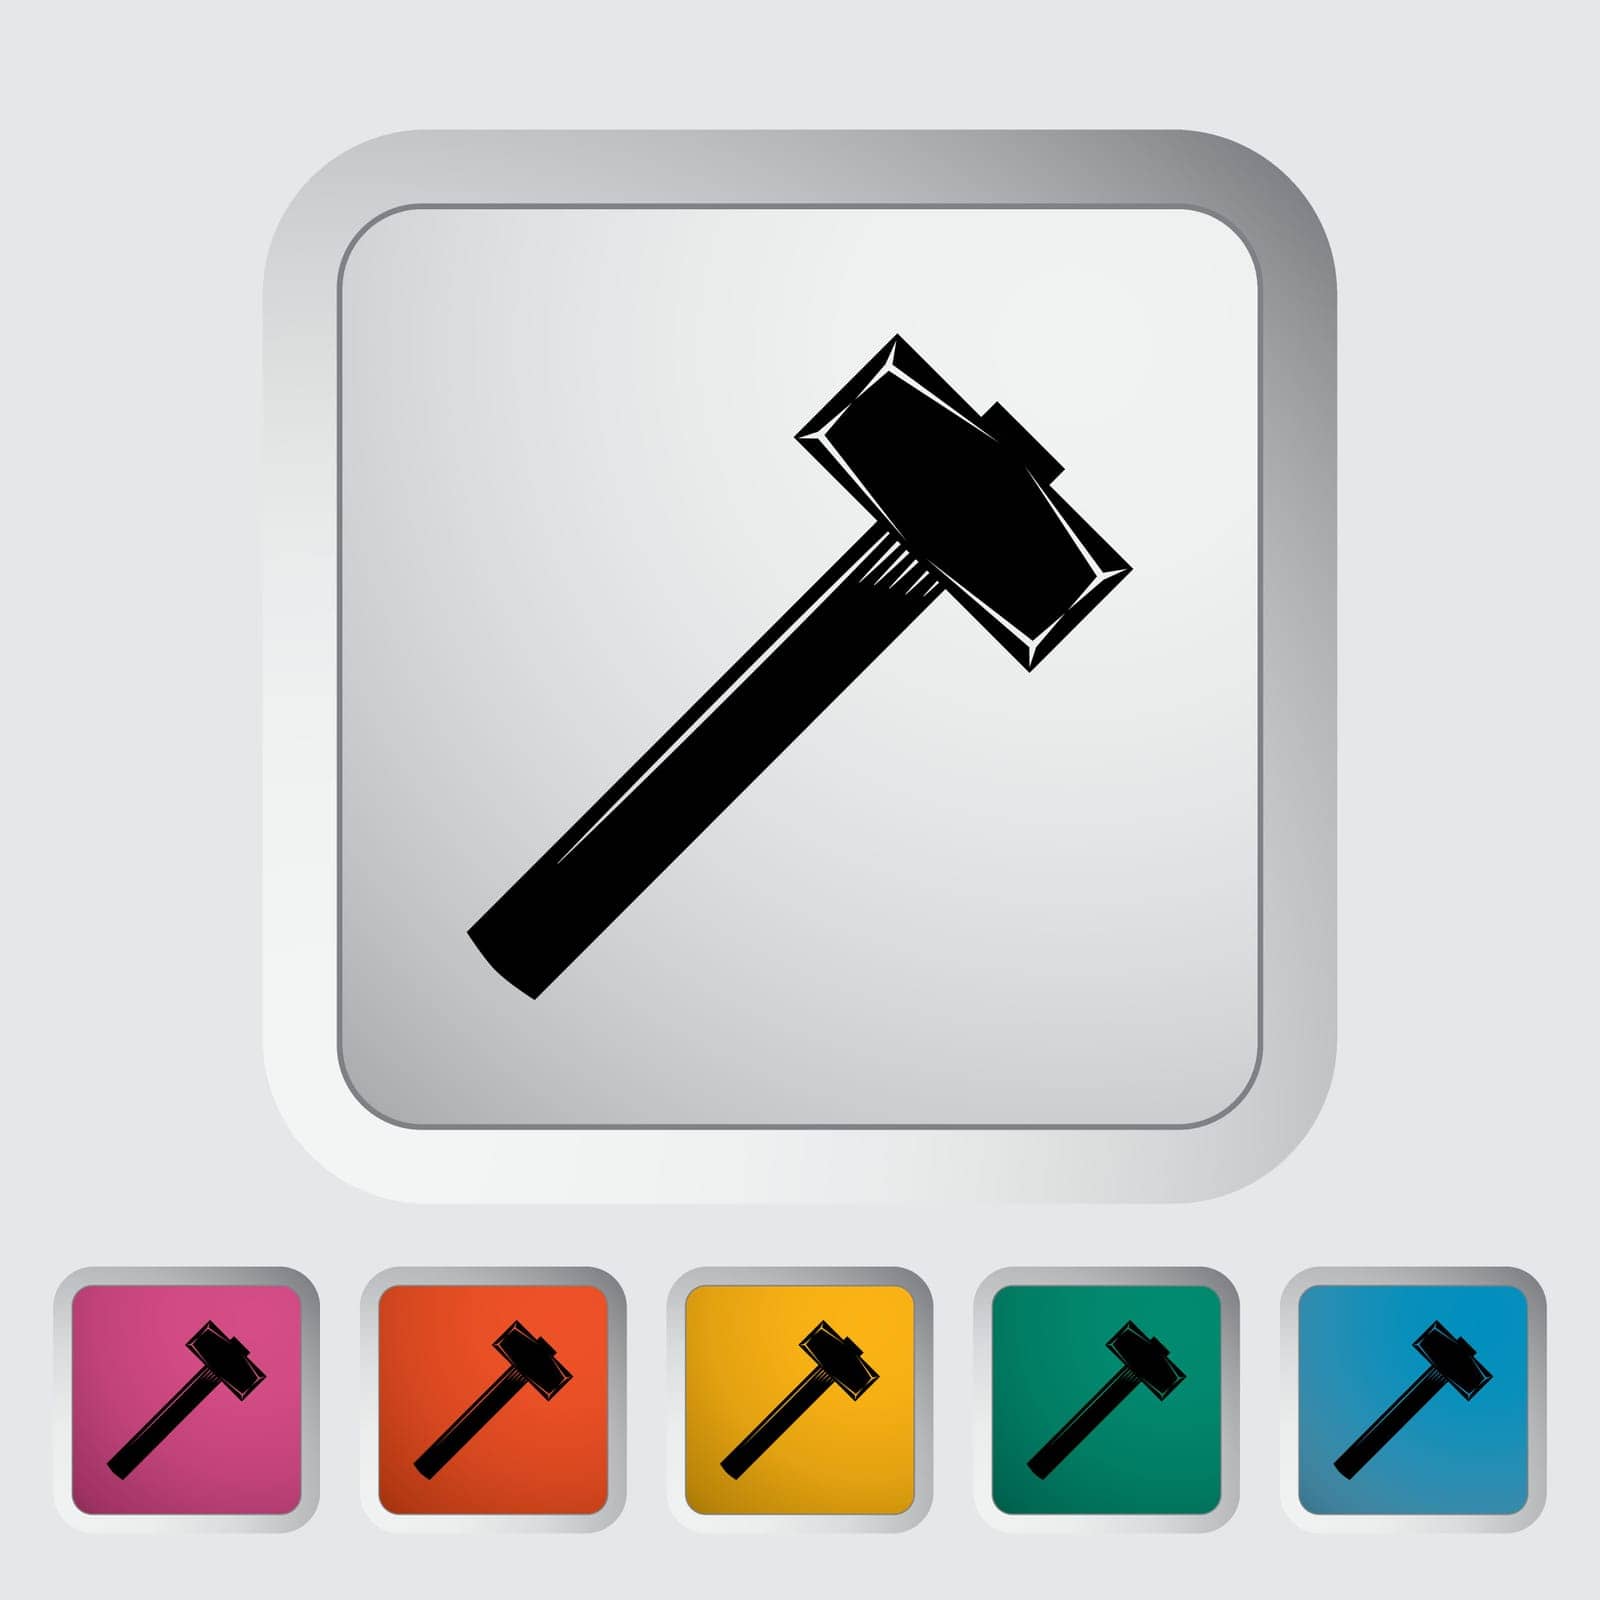 Hammer. Single flat icon on the button. Vector illustration.